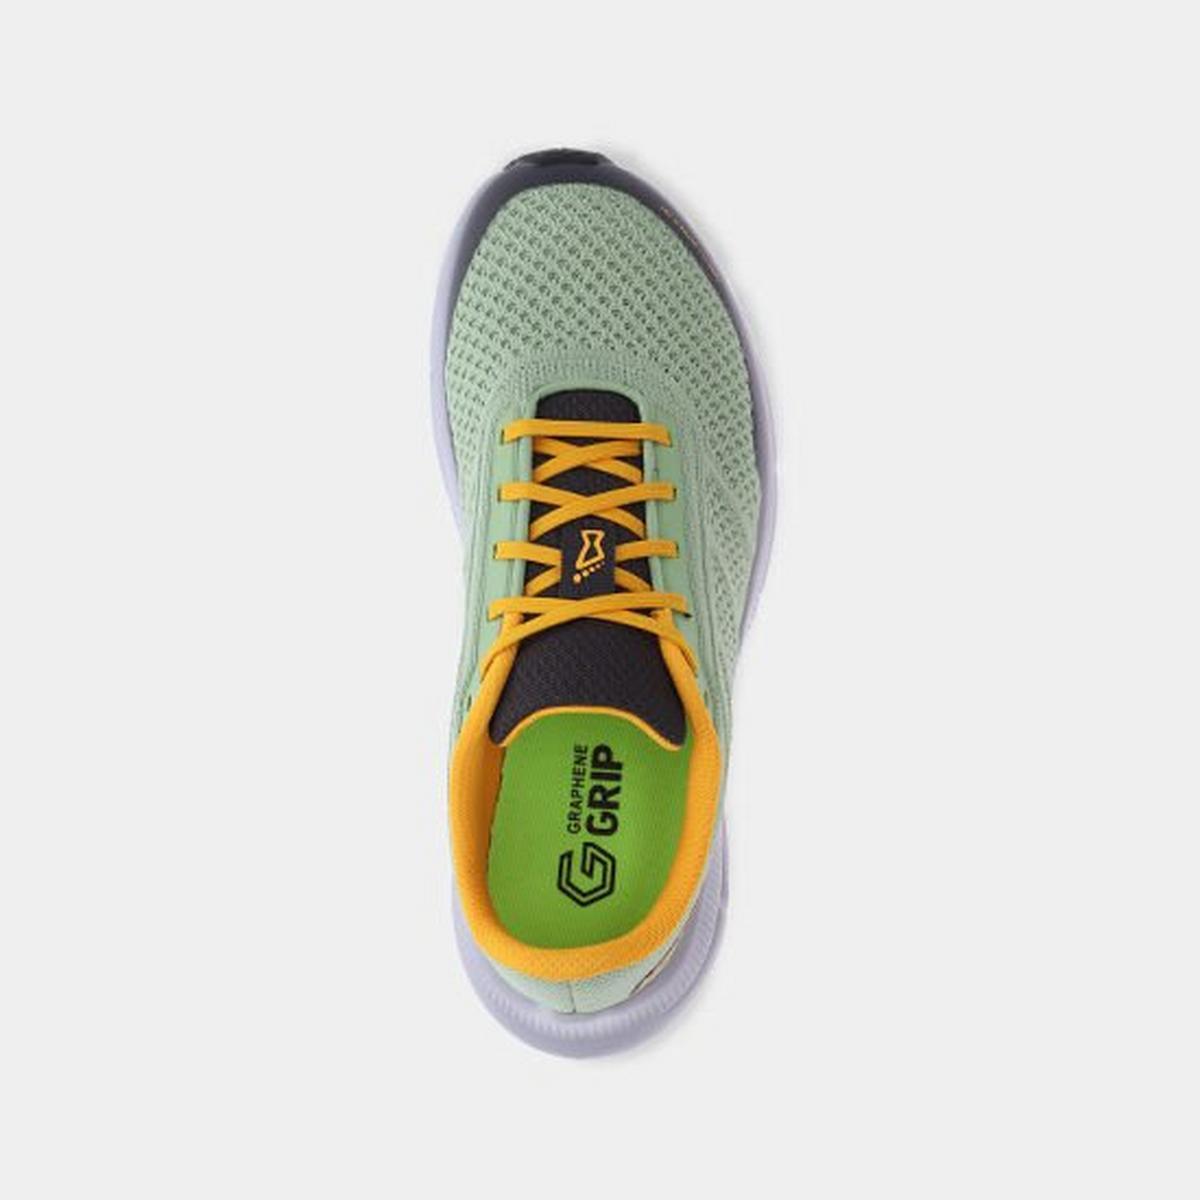 Inov-8 Women's Trailfly Ultra G 280 Running Shoes - Green